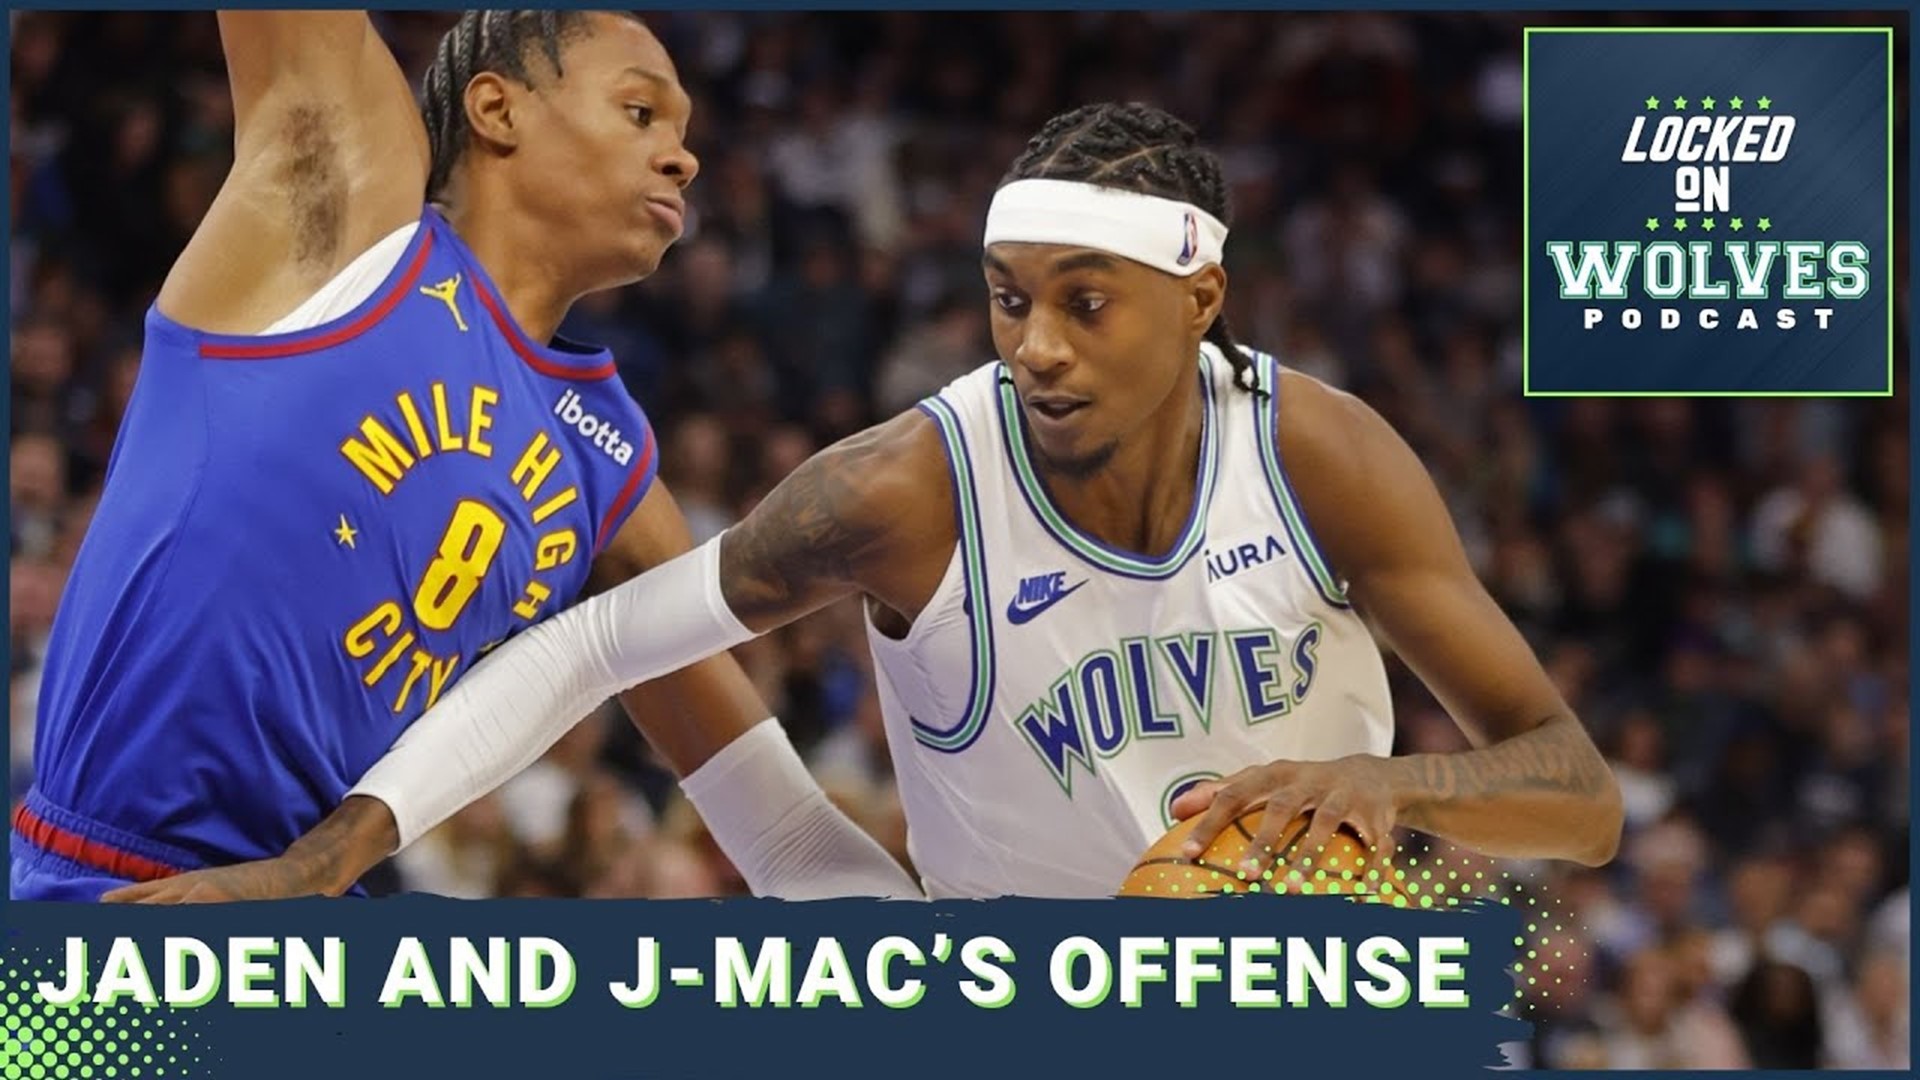 Jaden McDaniels' offense trends, Jordan McLaughlin's shooting, and Wolves-Cavs